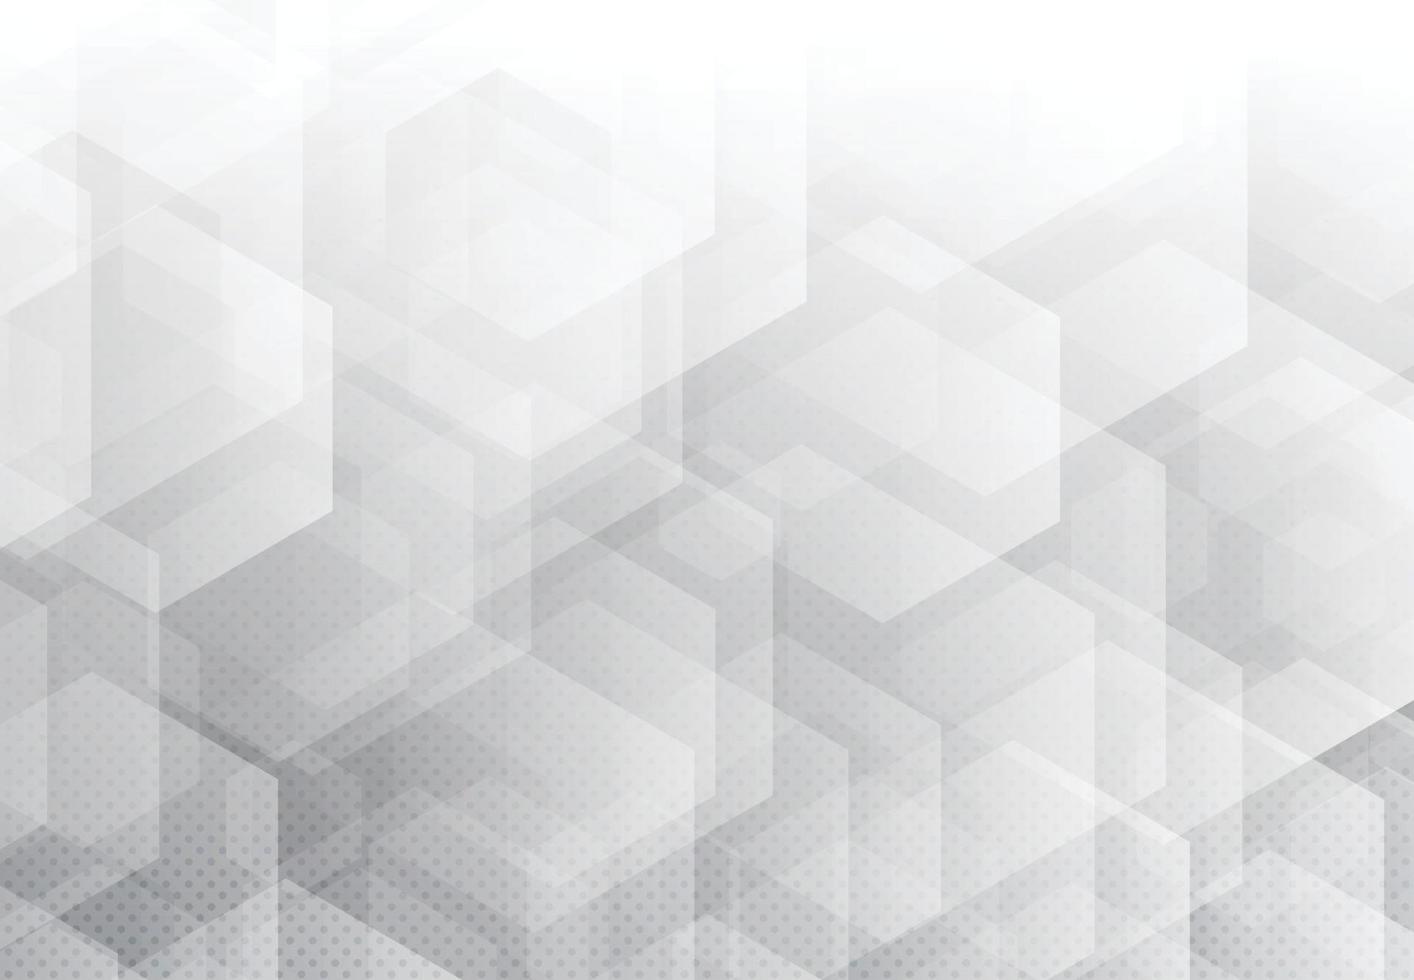 abstrakt design av vit hexagonal mönsterteknik med halvton dekorativ bakgrund. illustration vektor eps10